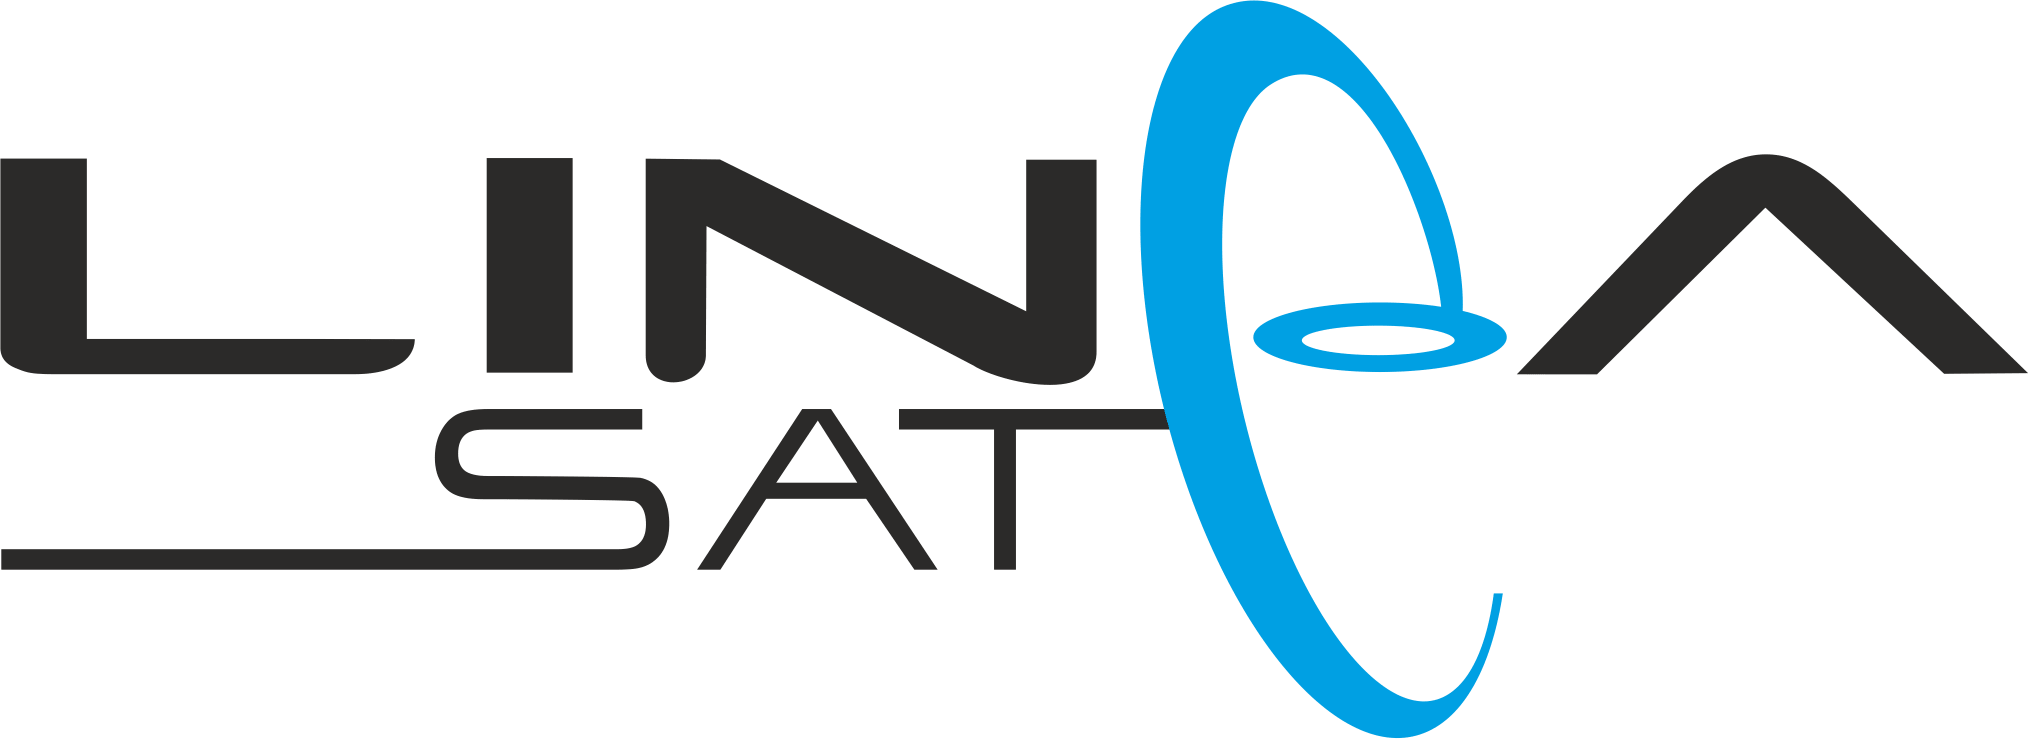 Lineasat - logo